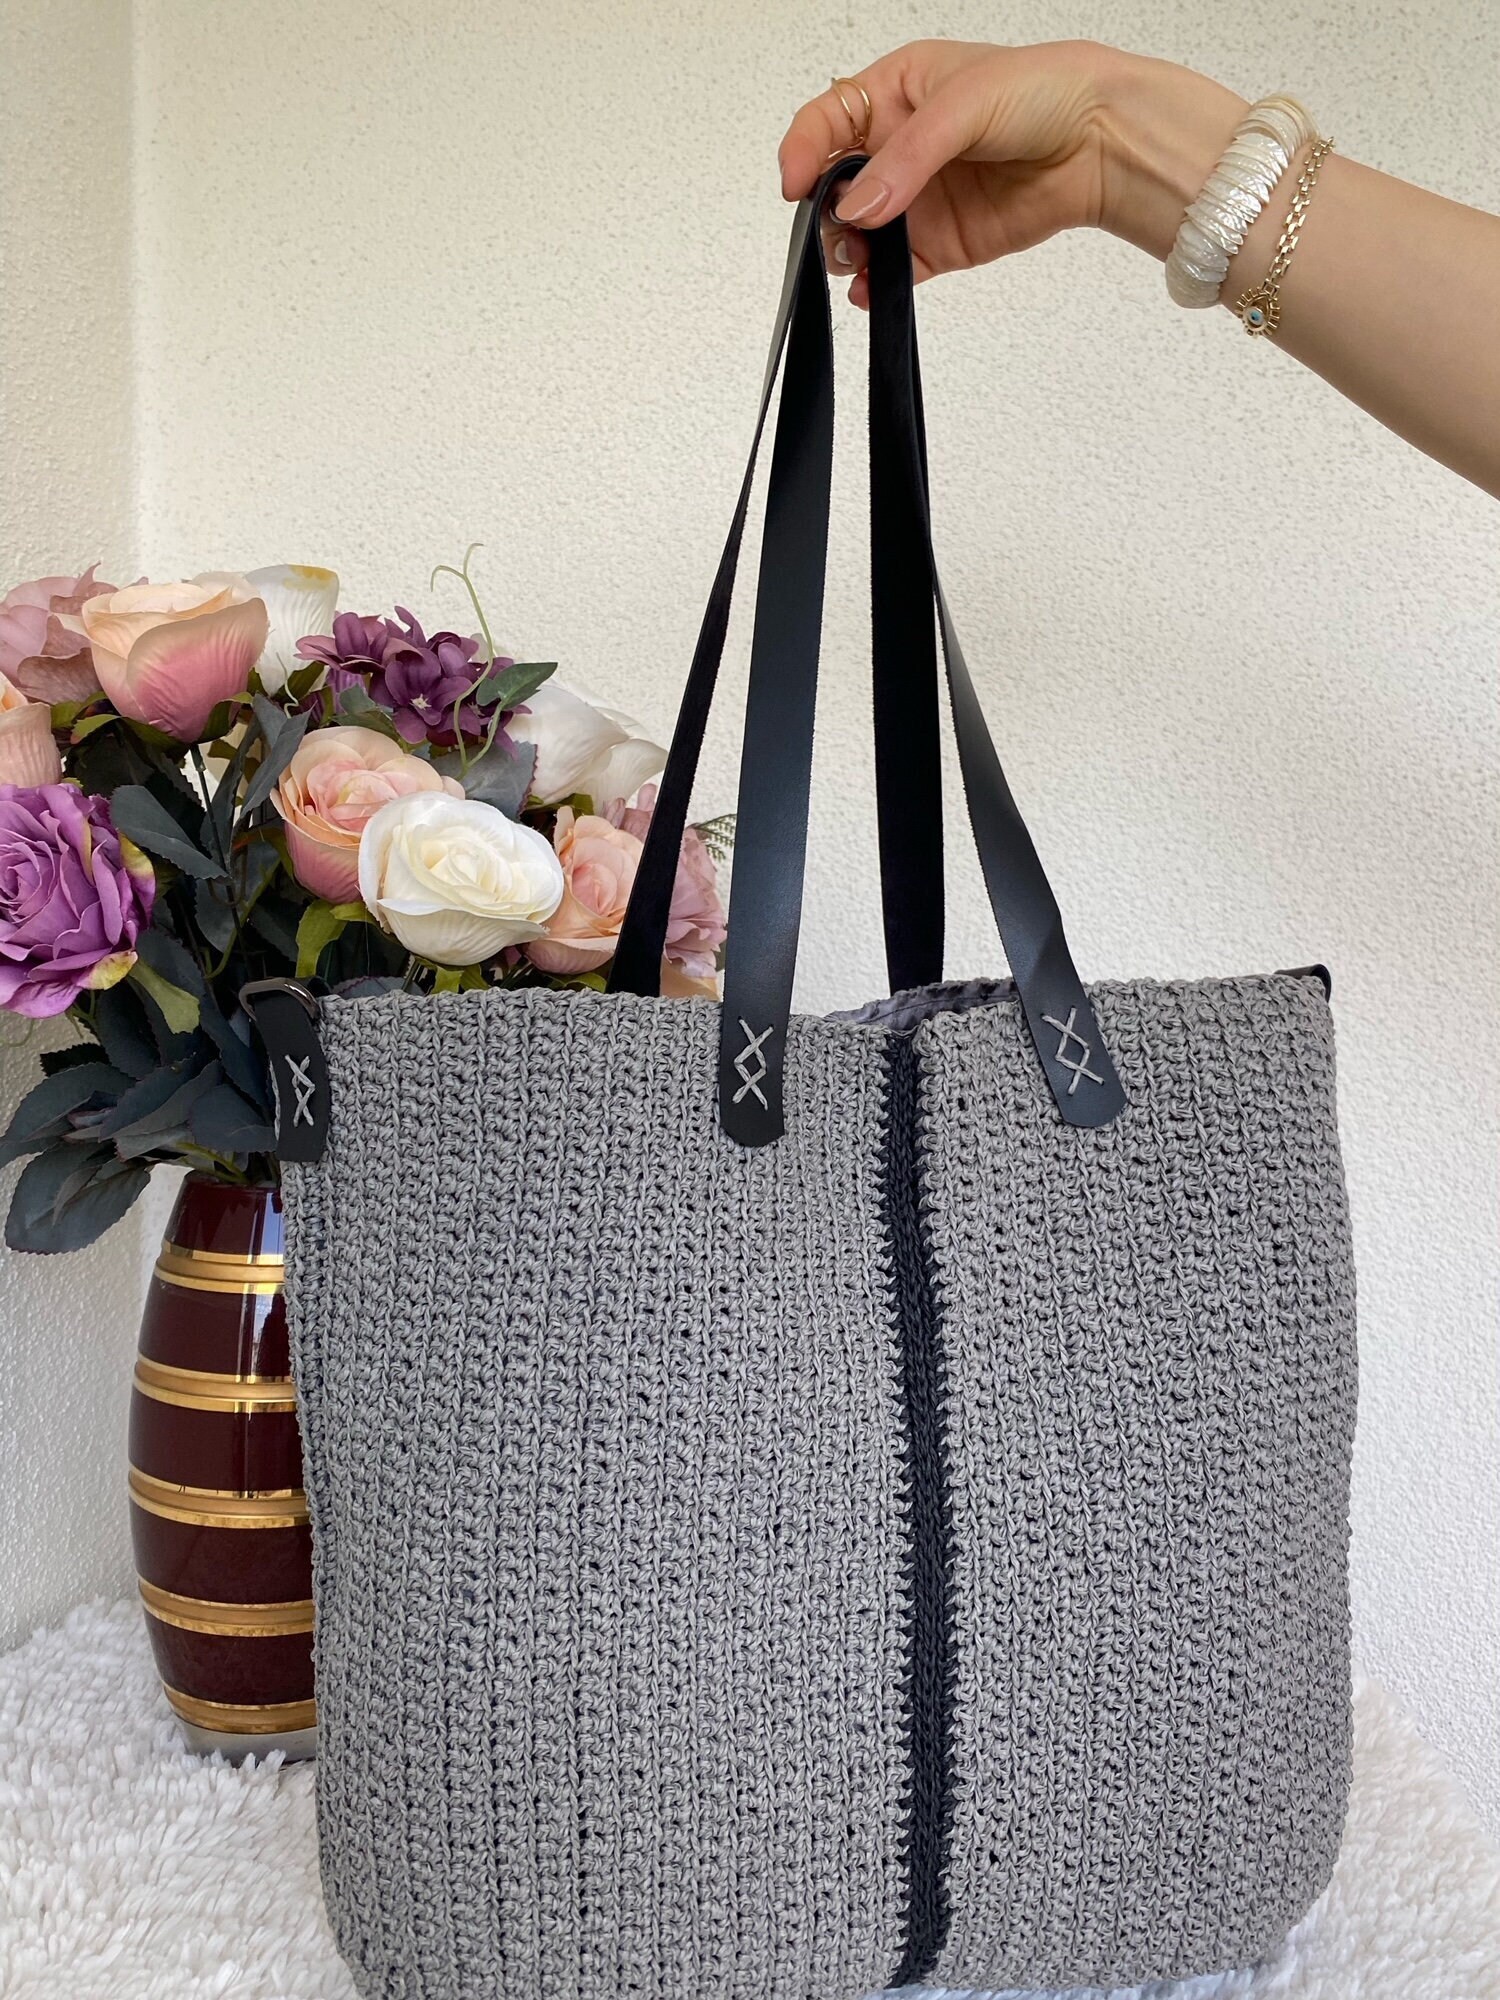 How to Wear a Tote Bag, Crossbody Bag, + Other Handbags - Merrick's Art